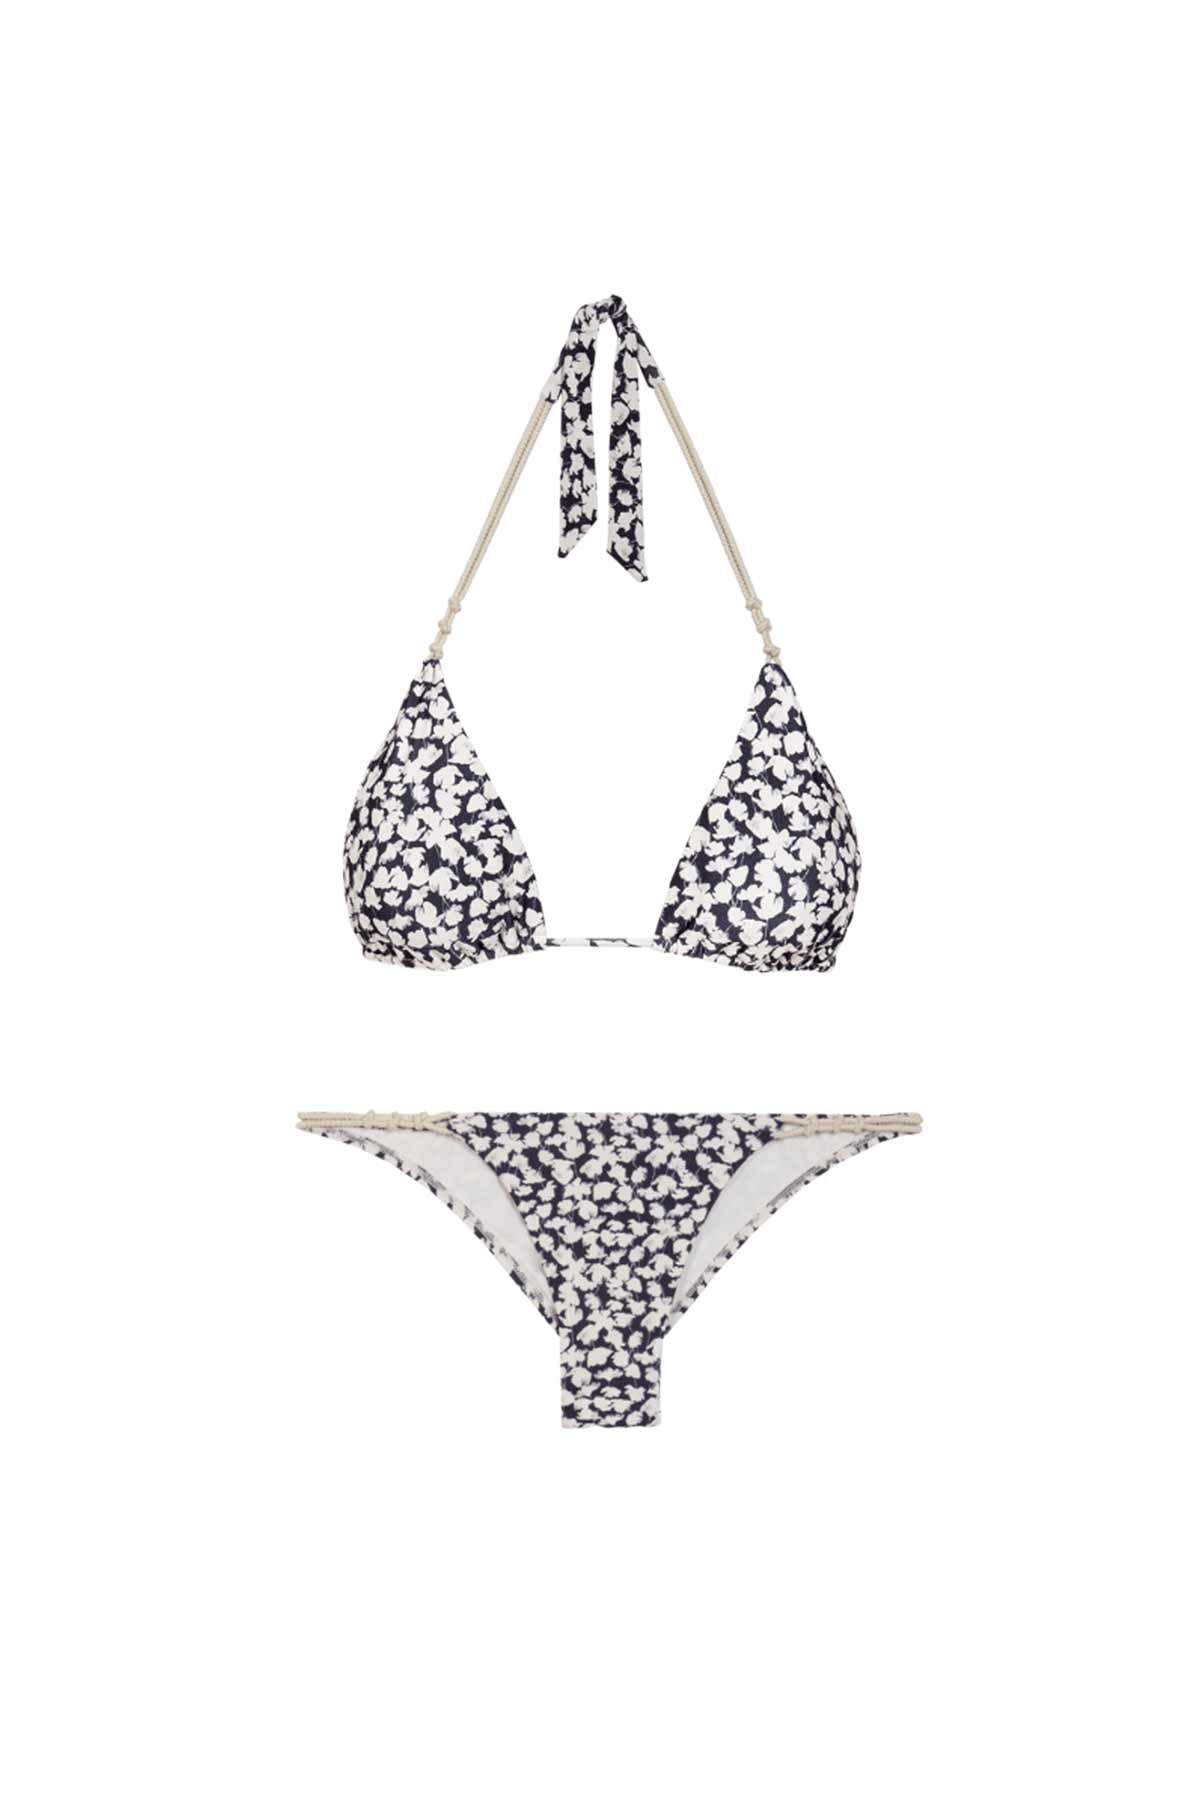 Vix Julien Rope Knot Tri Üçgen Bikini-Libas Trendy Fashion Store